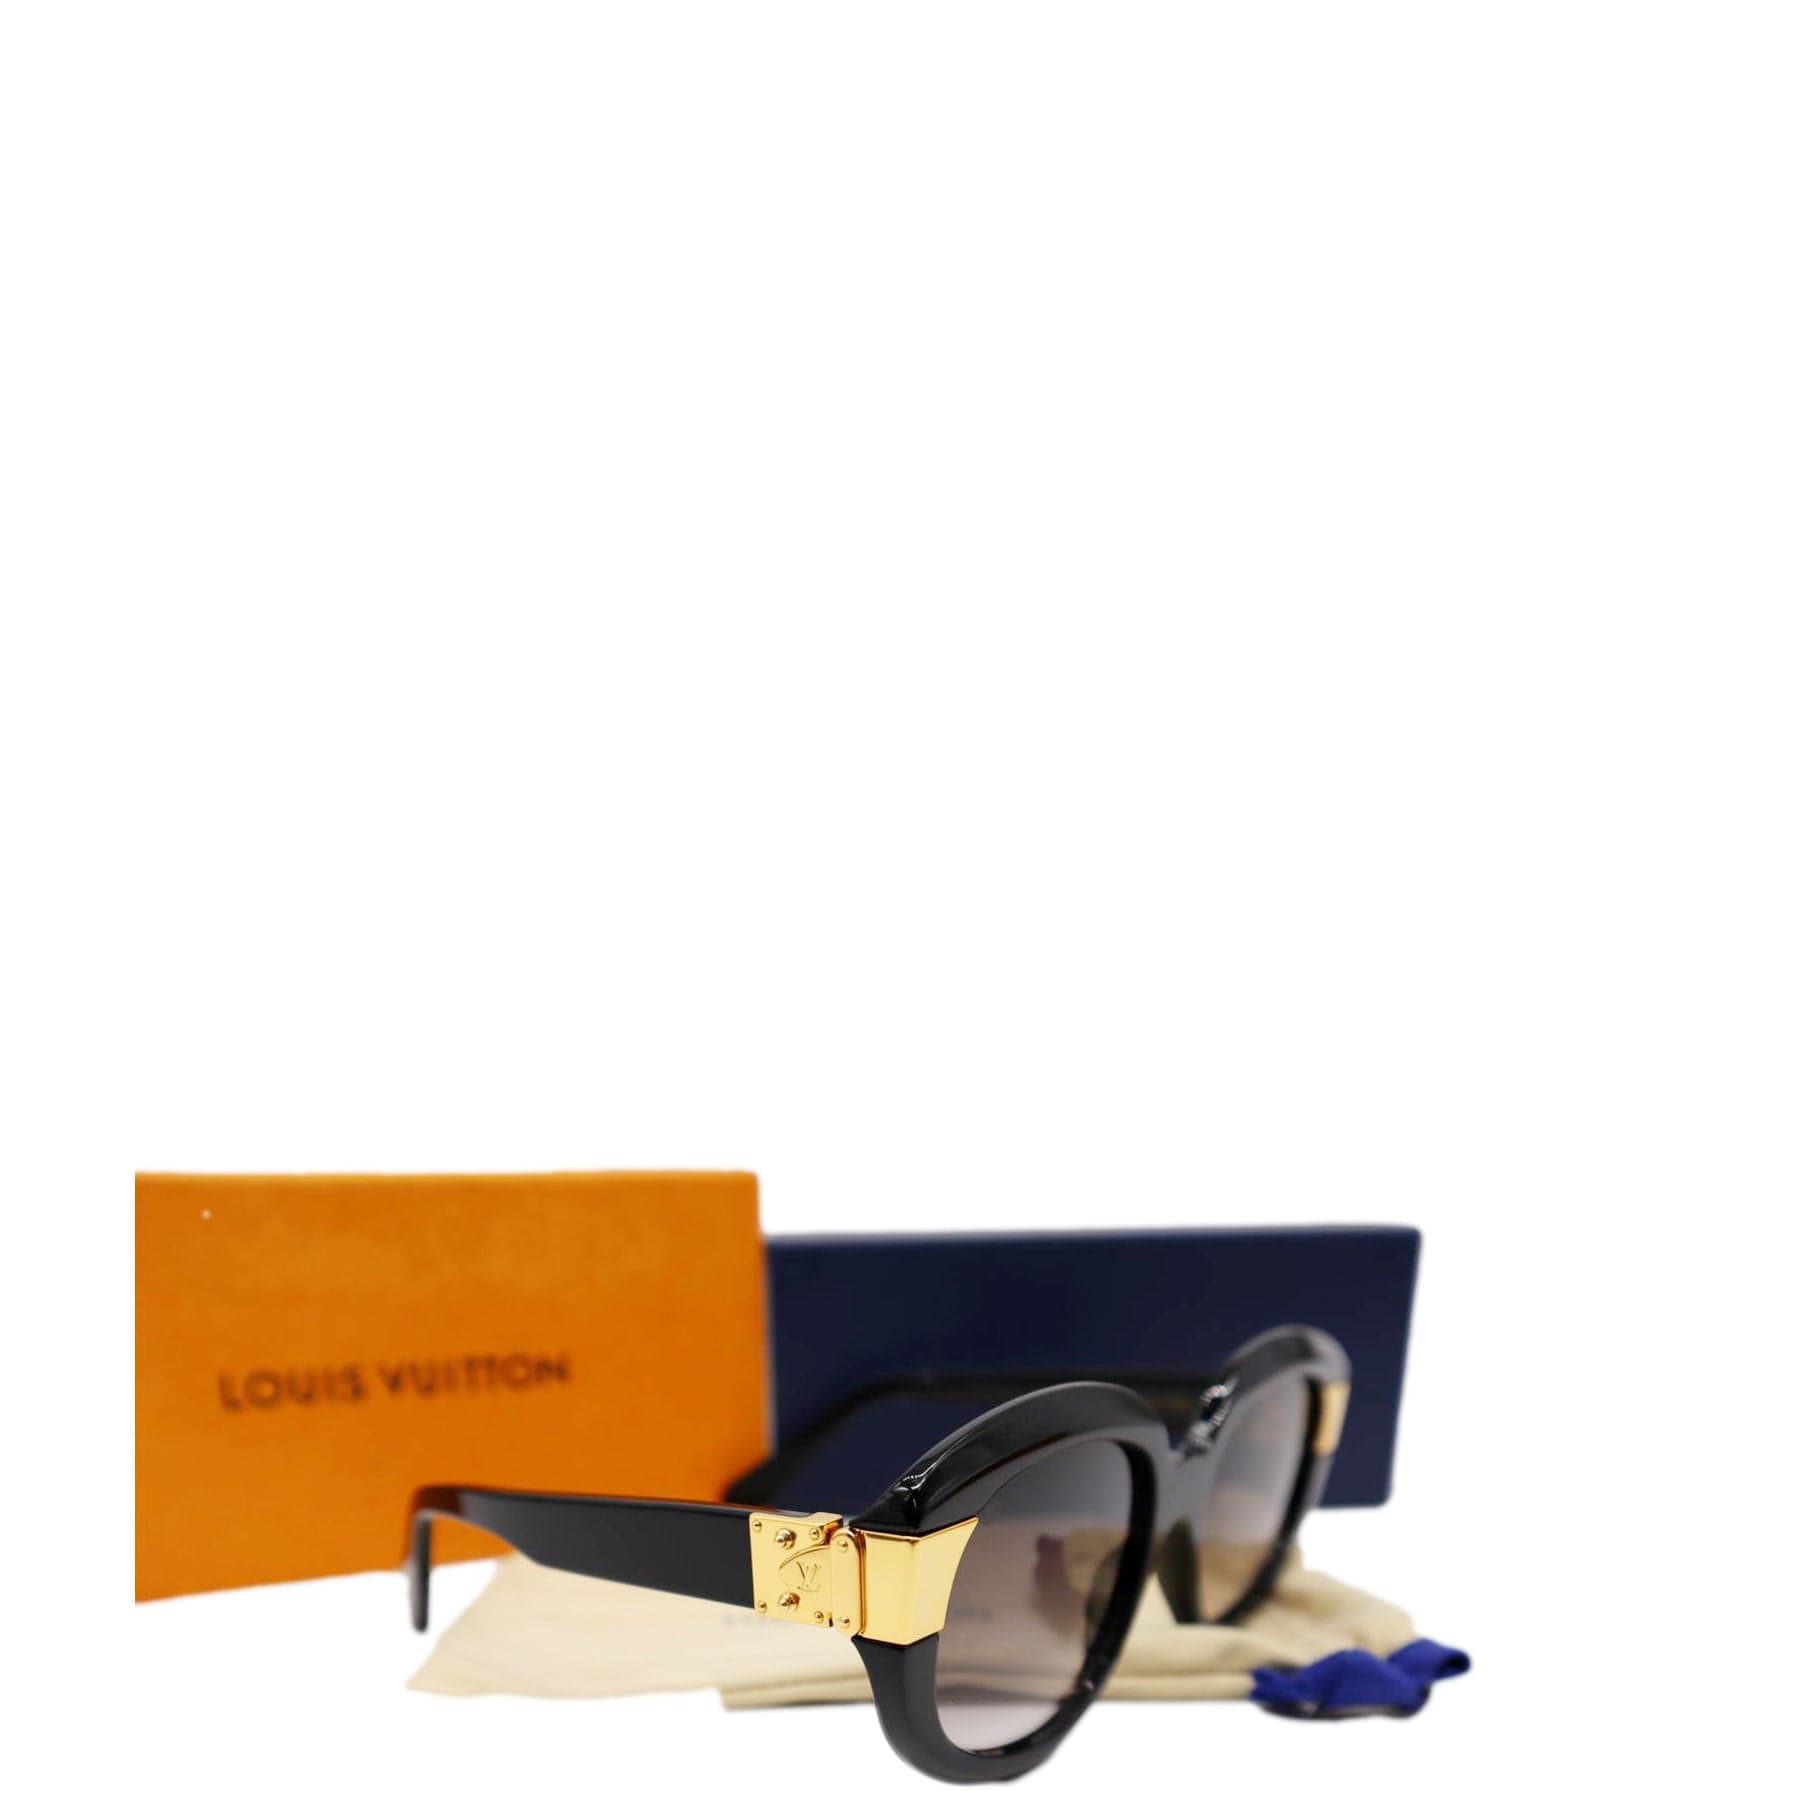 Louis Vuitton Black My Fair Lady Sunglasses